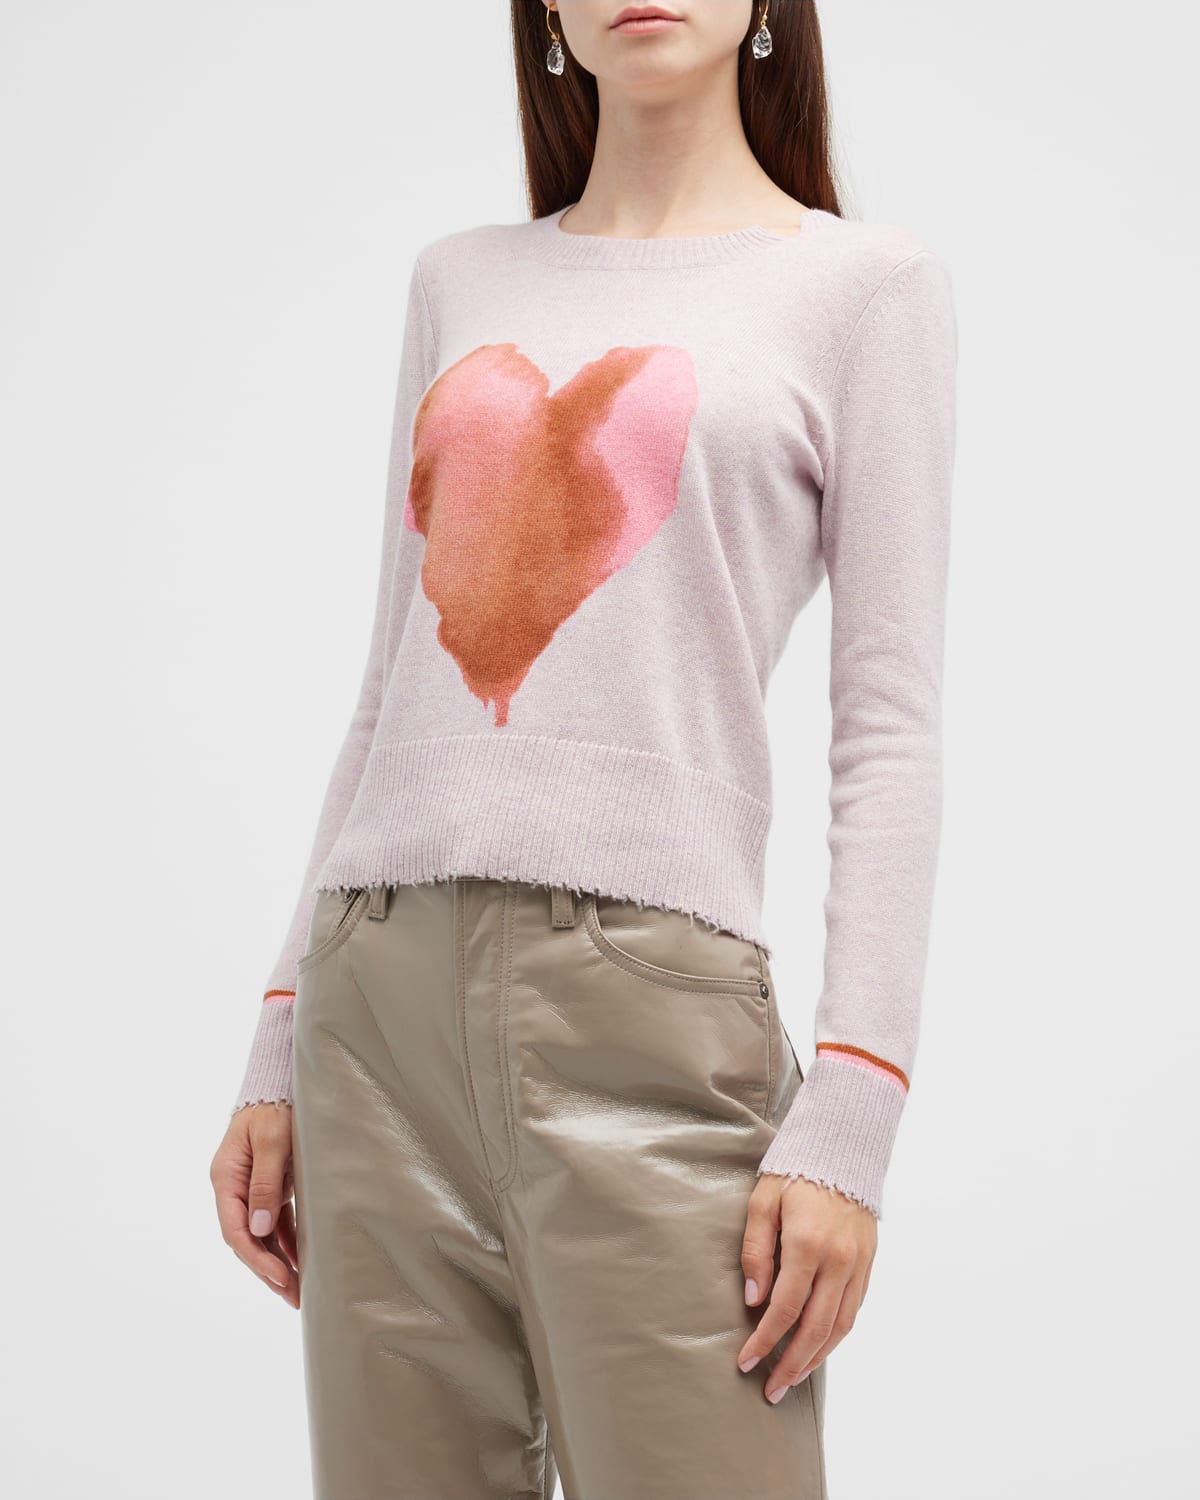 Lisa Todd Ice Breaker Cashmere Heart Sweater